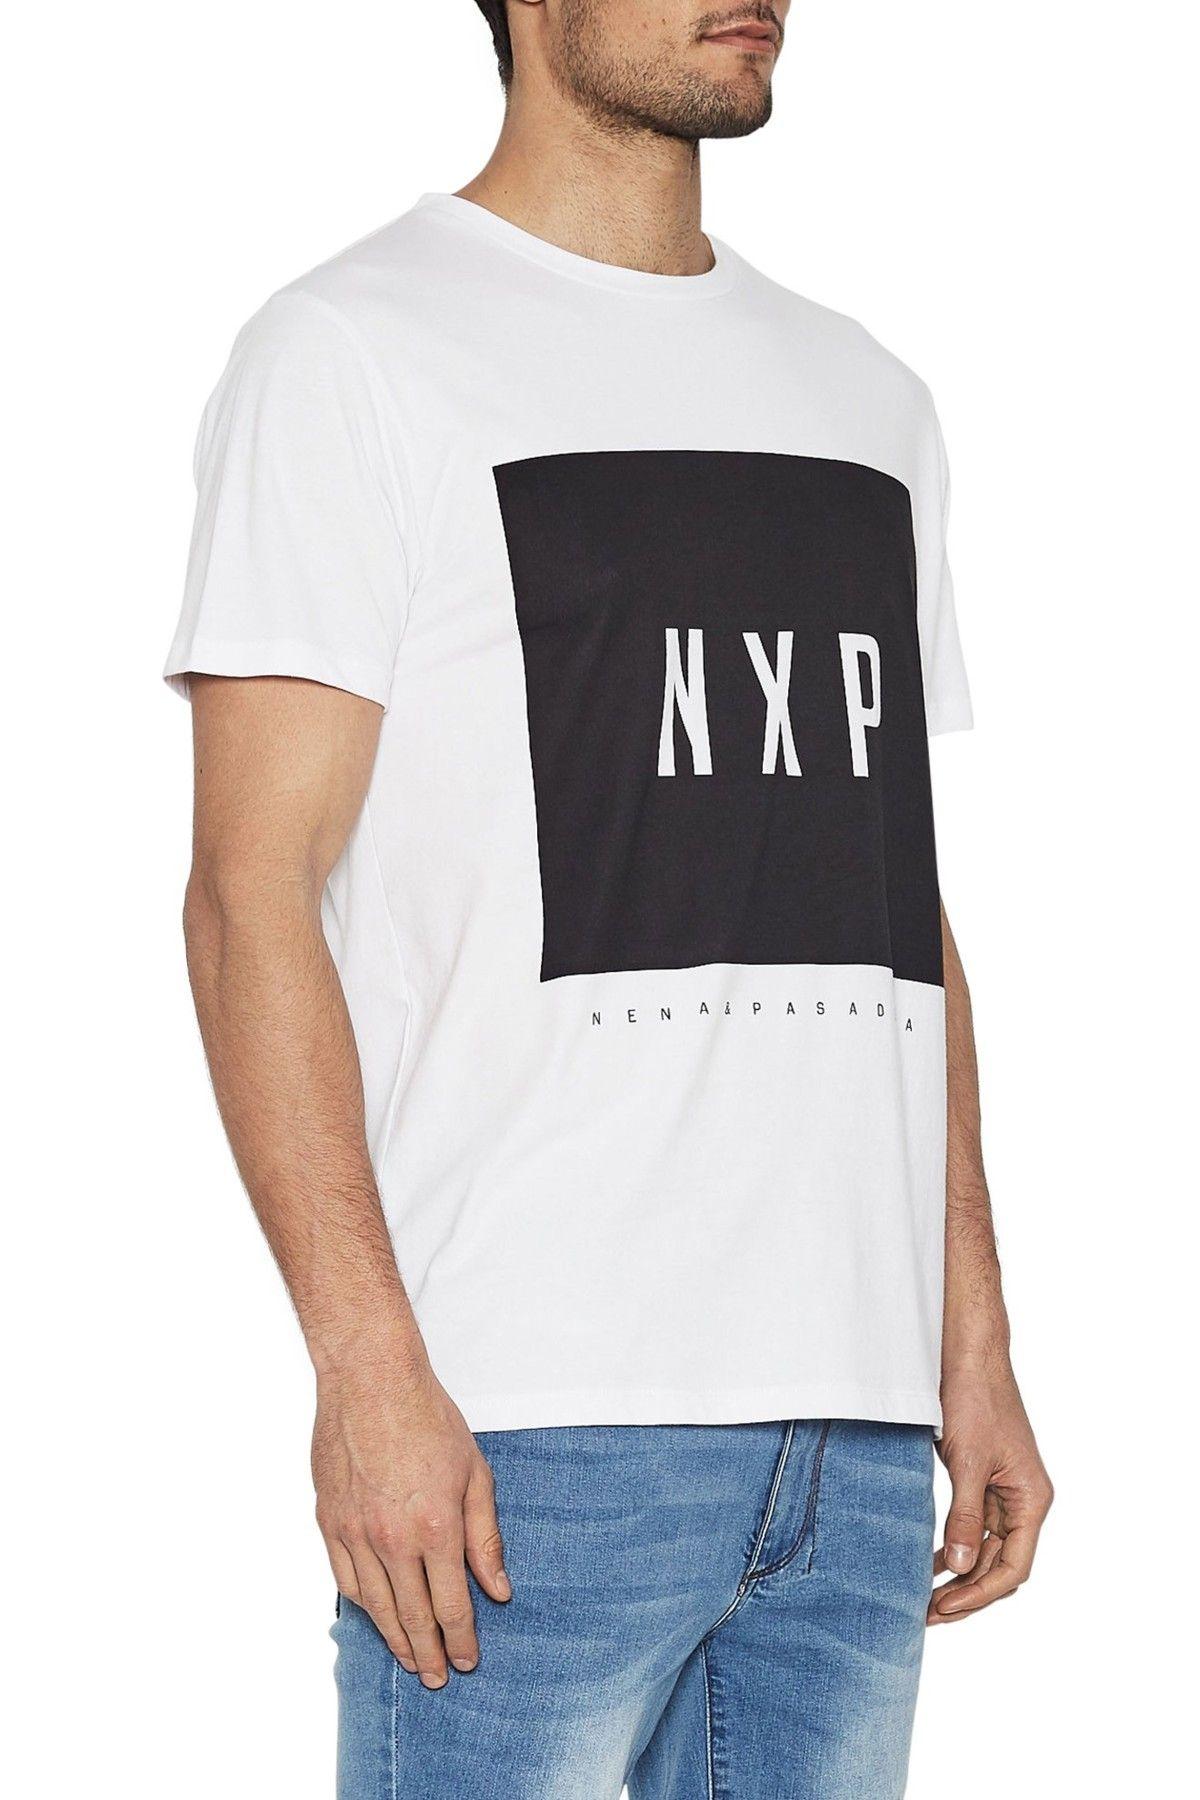 NXP Logo - NXP Logo T Shirt WHITE FMNN1913